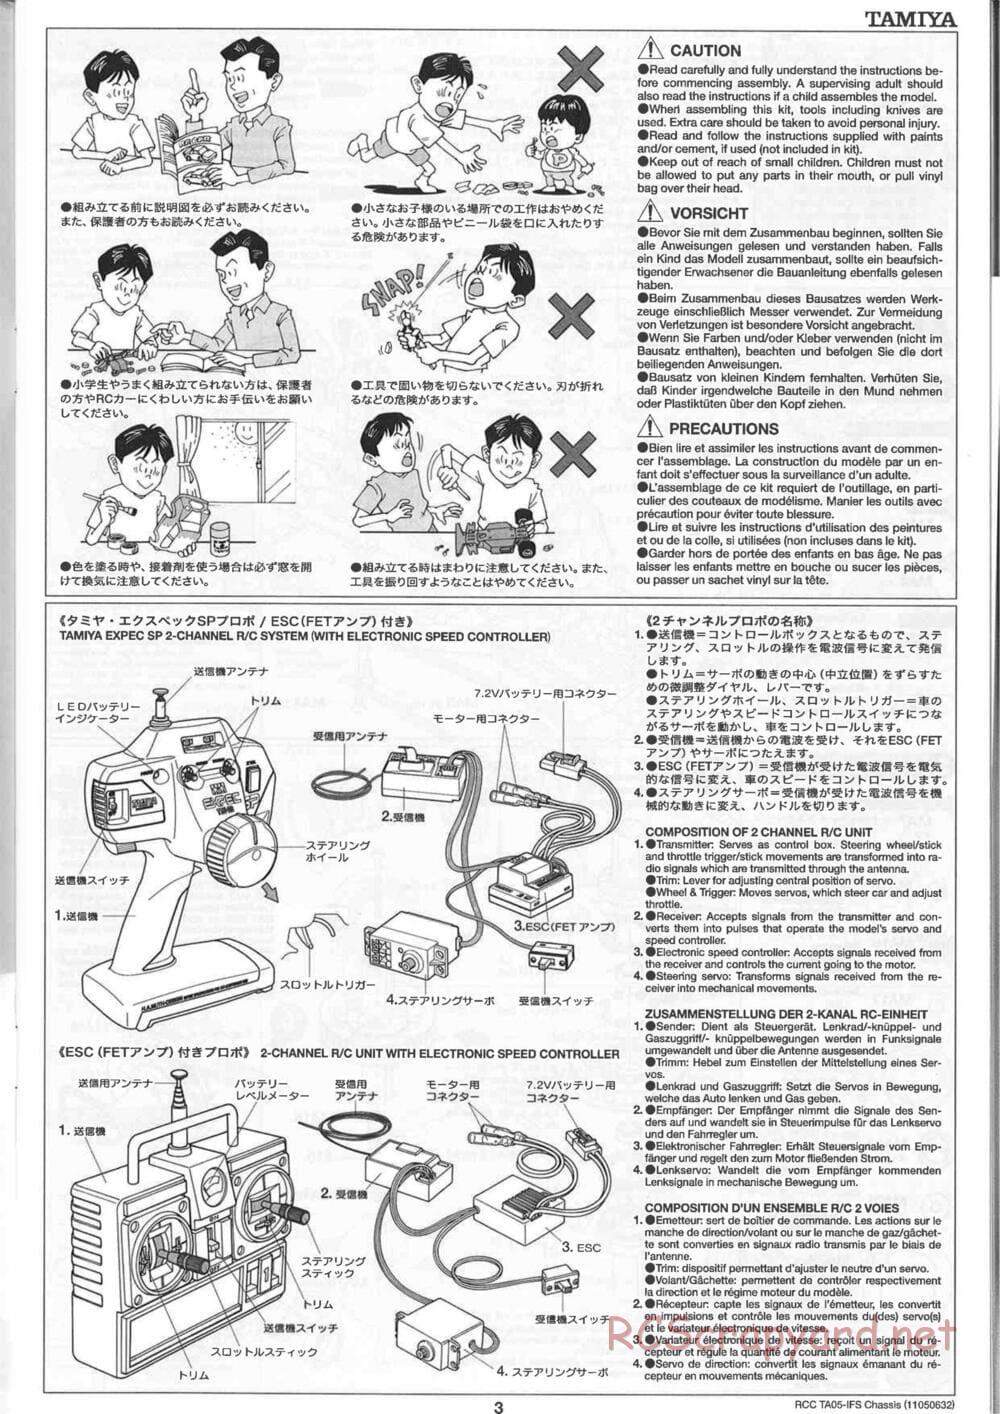 Tamiya - TA05-IFS Chassis - Manual - Page 3